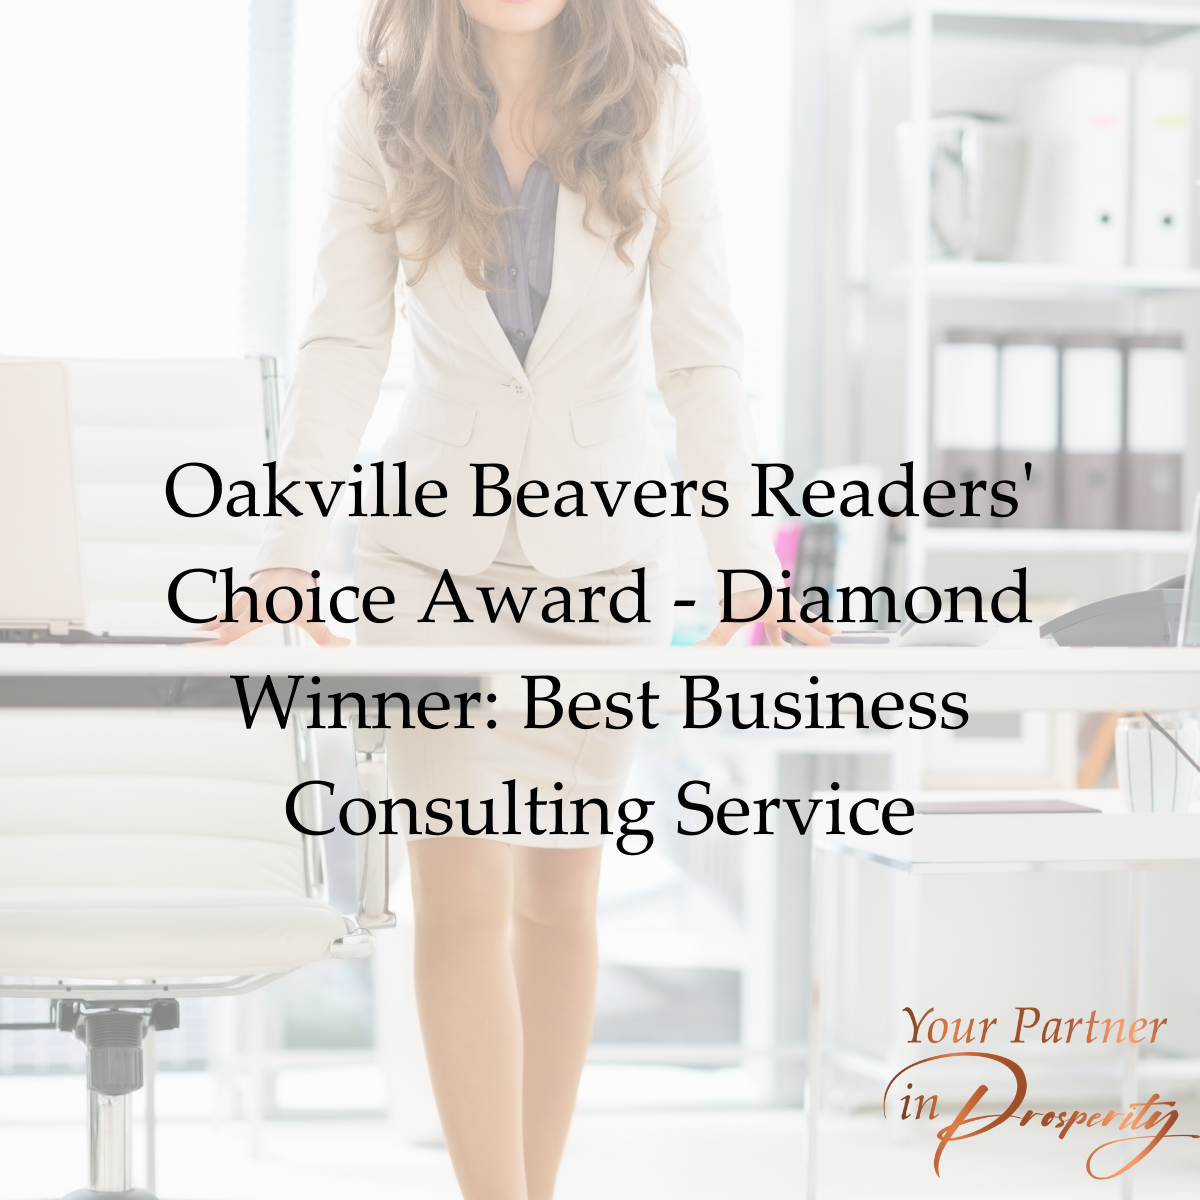 Oakville Beavers Readers' Choice Award - Diamond Winner: Best Business Consulting Service